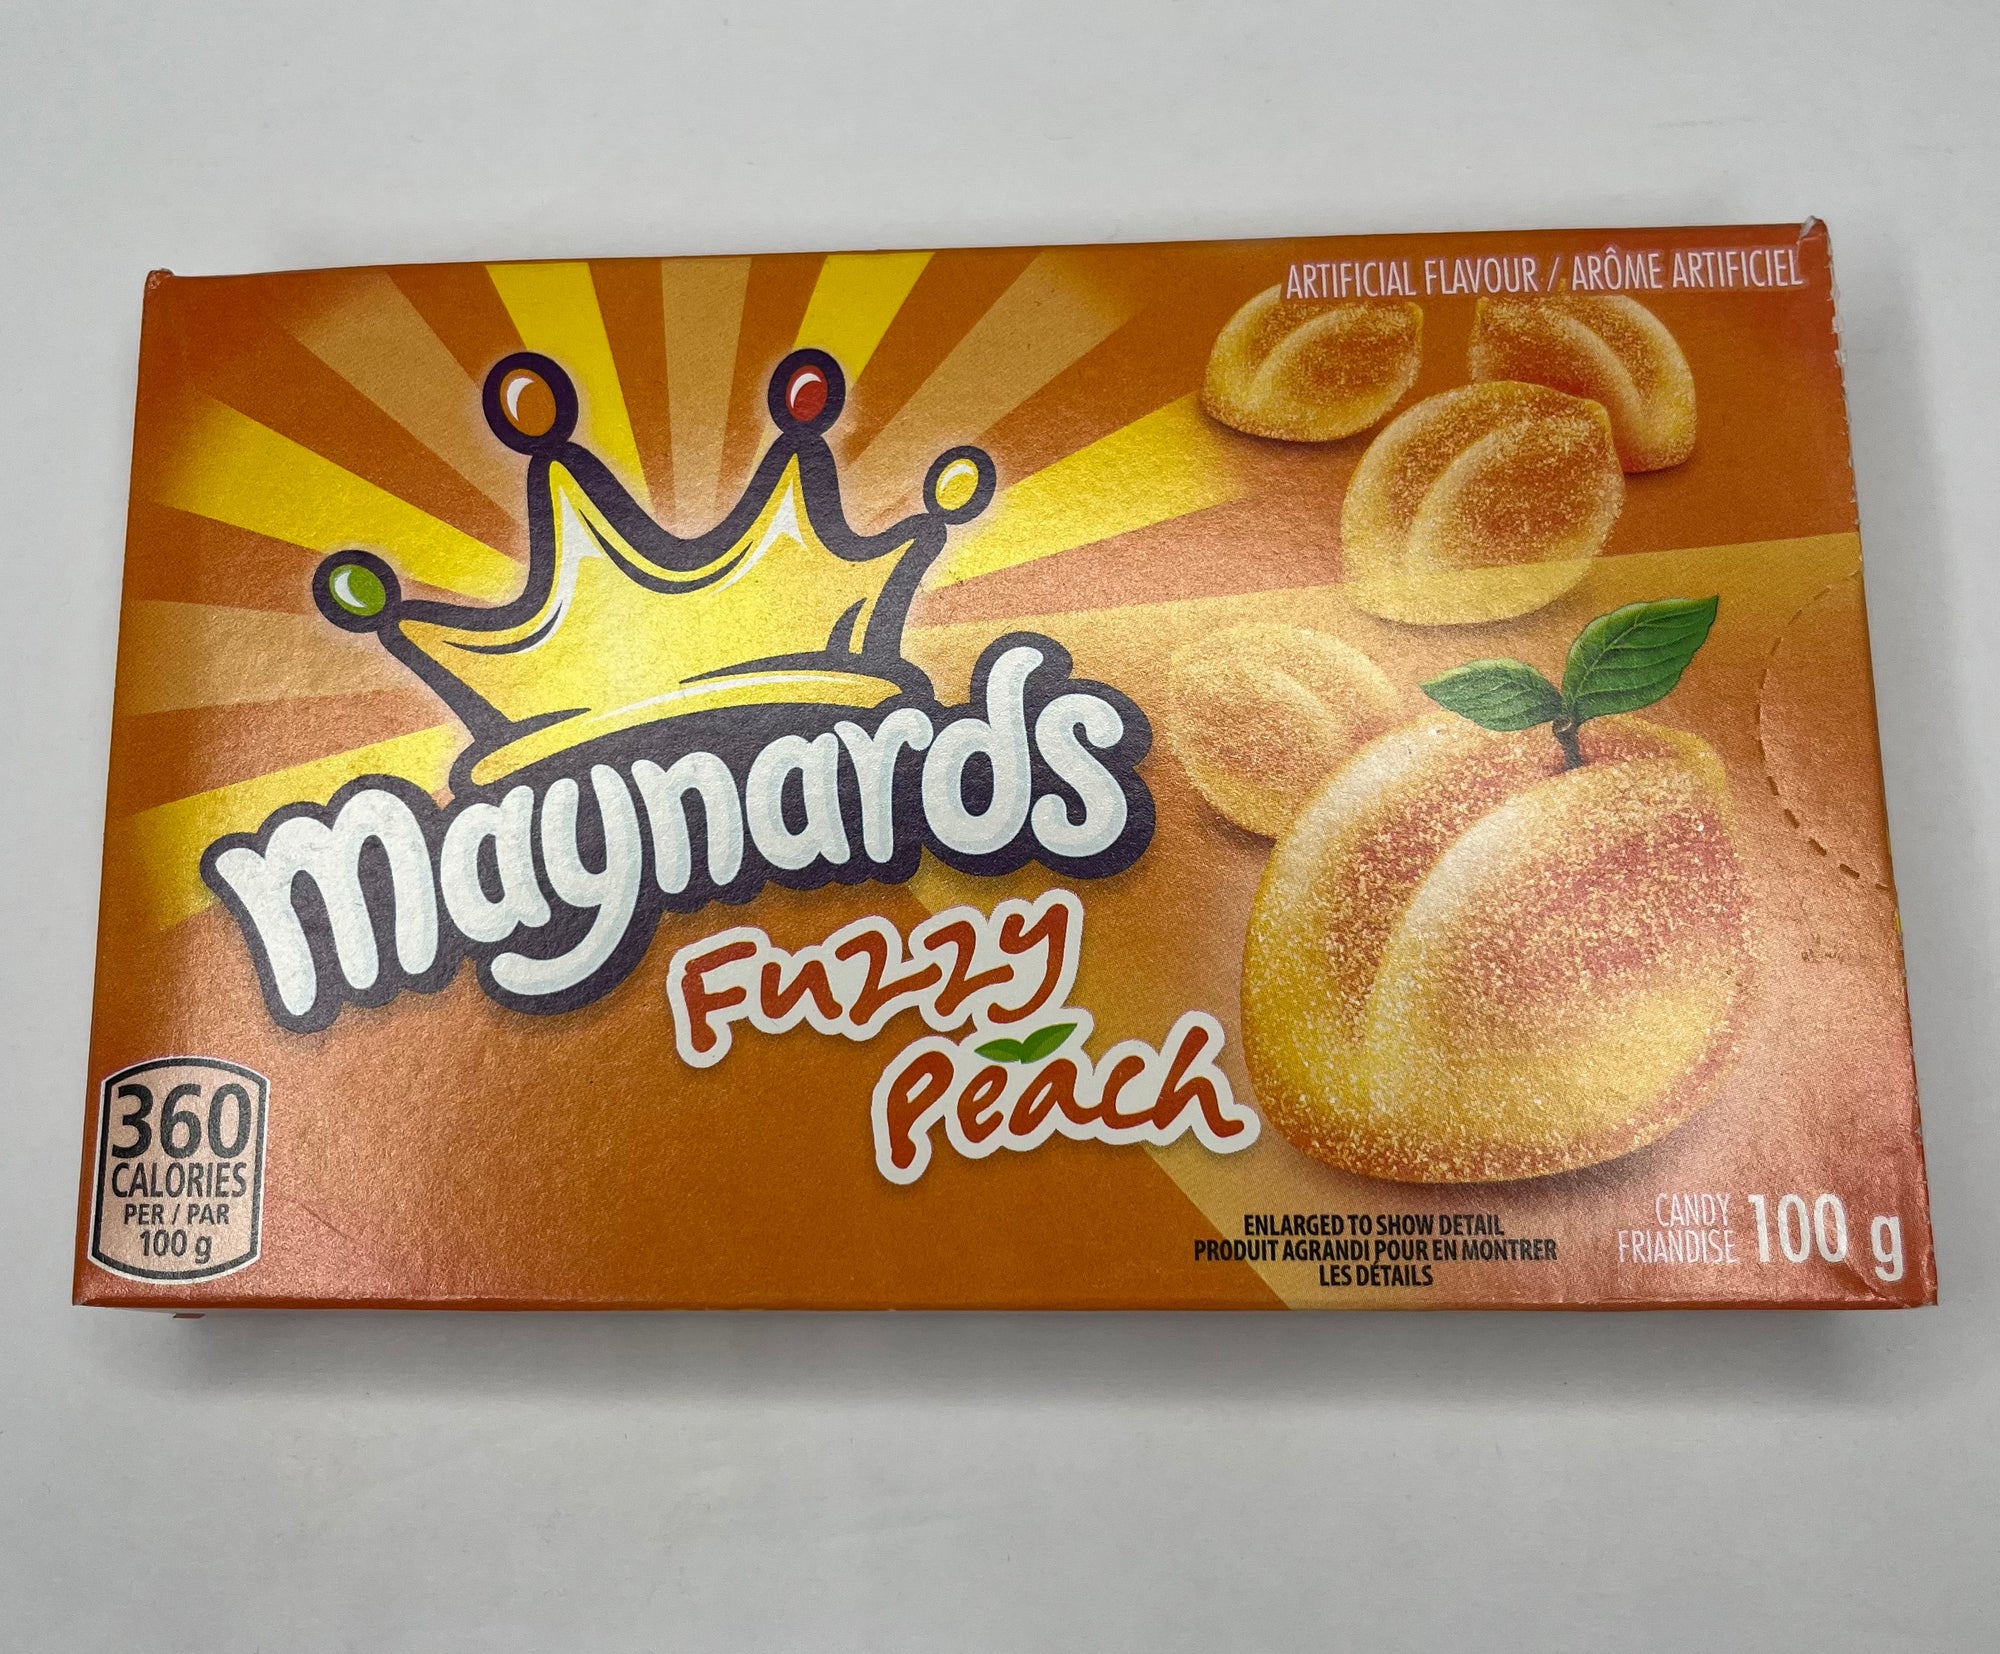 Maynards Fuzzy Peach (Canada)